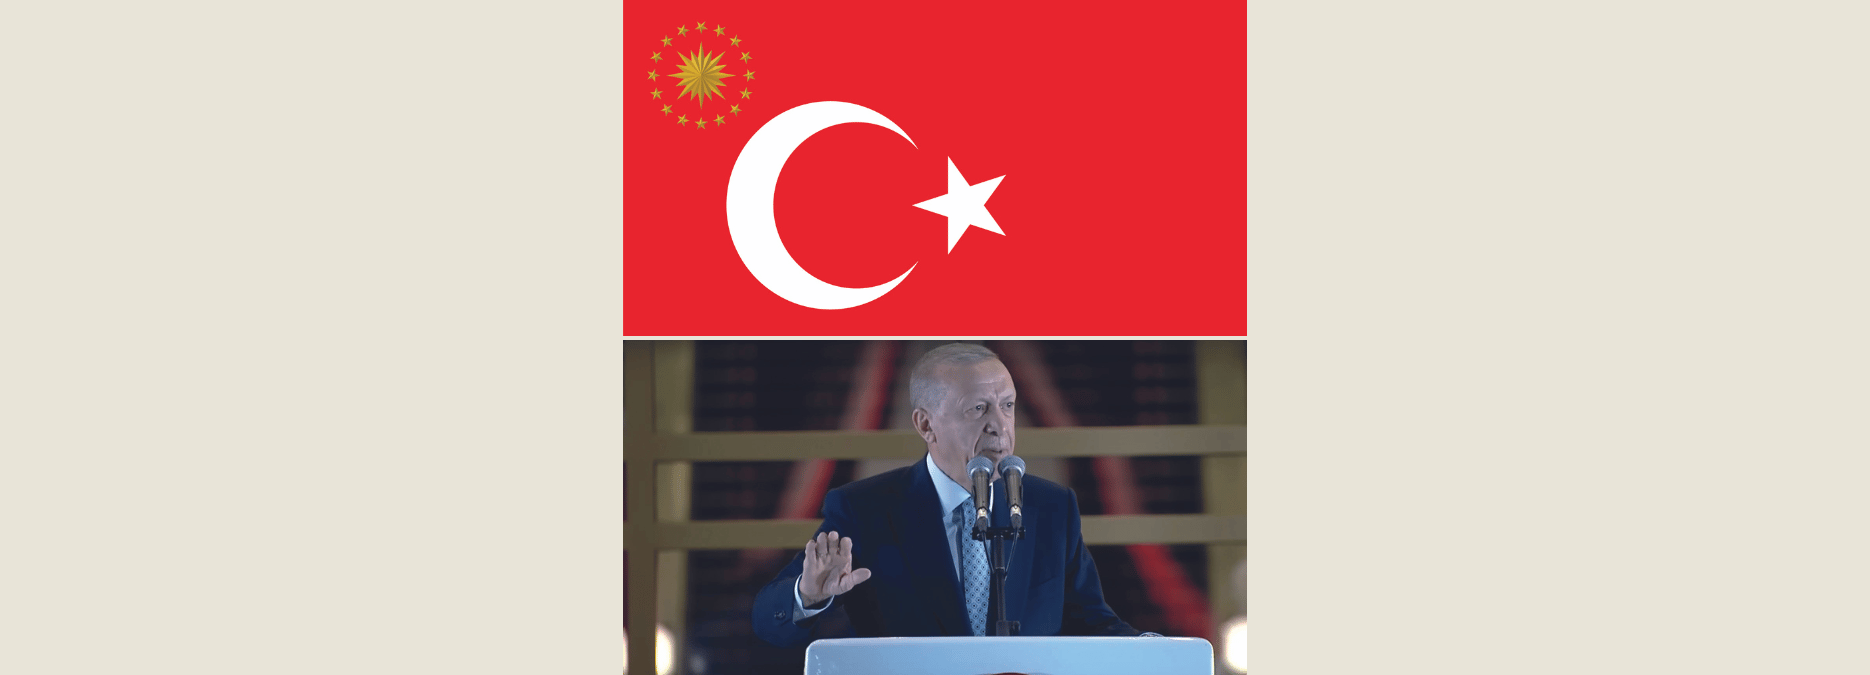 La Turquie d'Erdogan - Les relations entre l'Europe et la Turquie